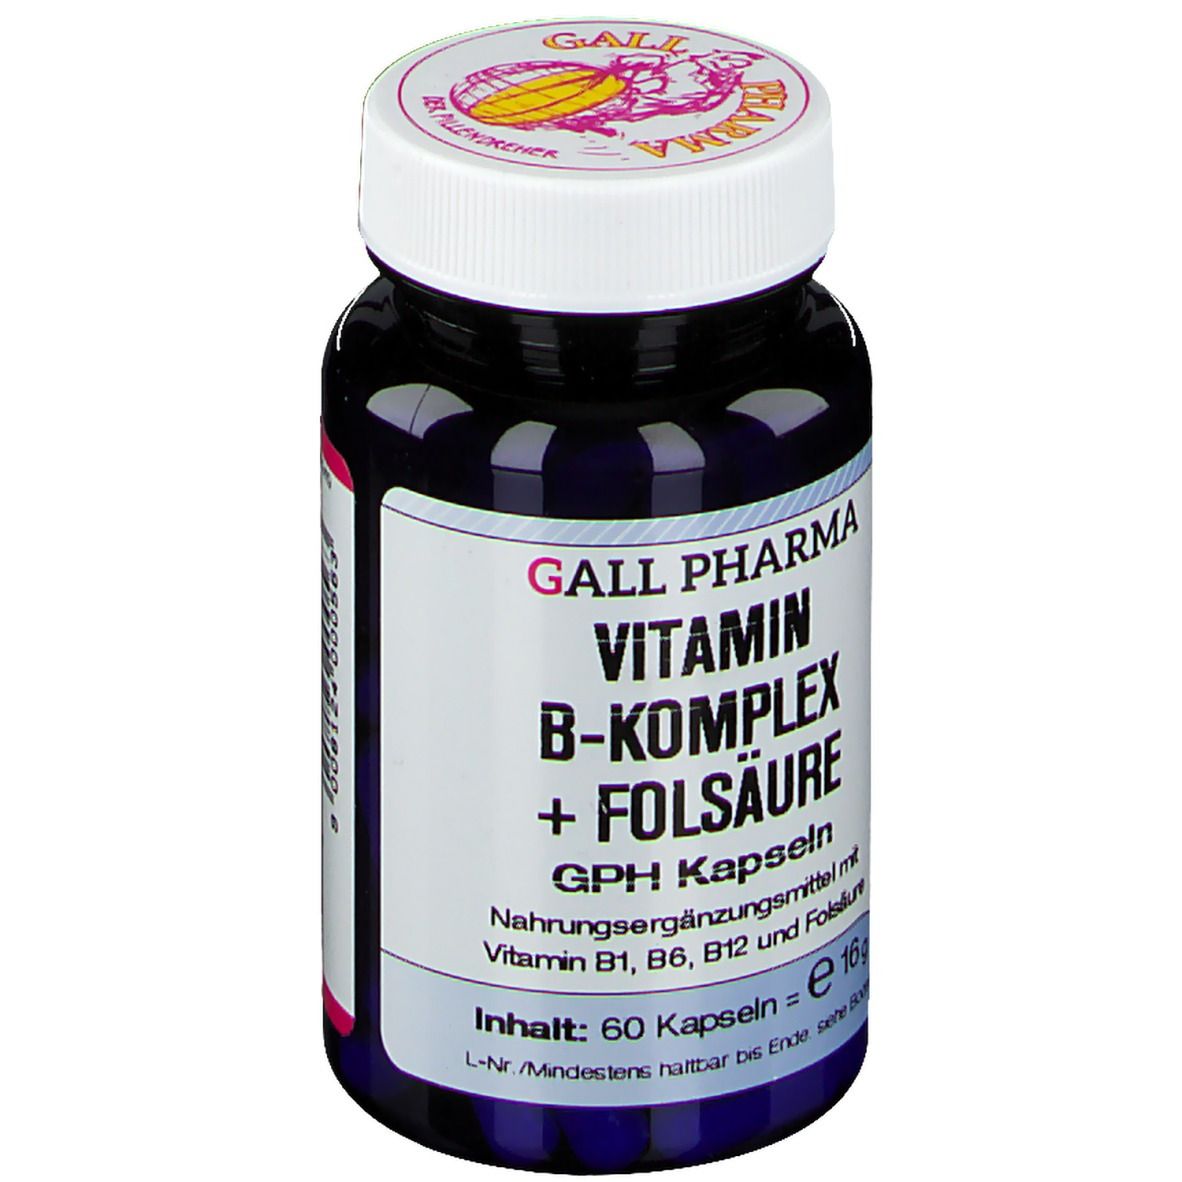 GALL PHARMA Vitamin B Komplex + Folsäure GPH Kapseln